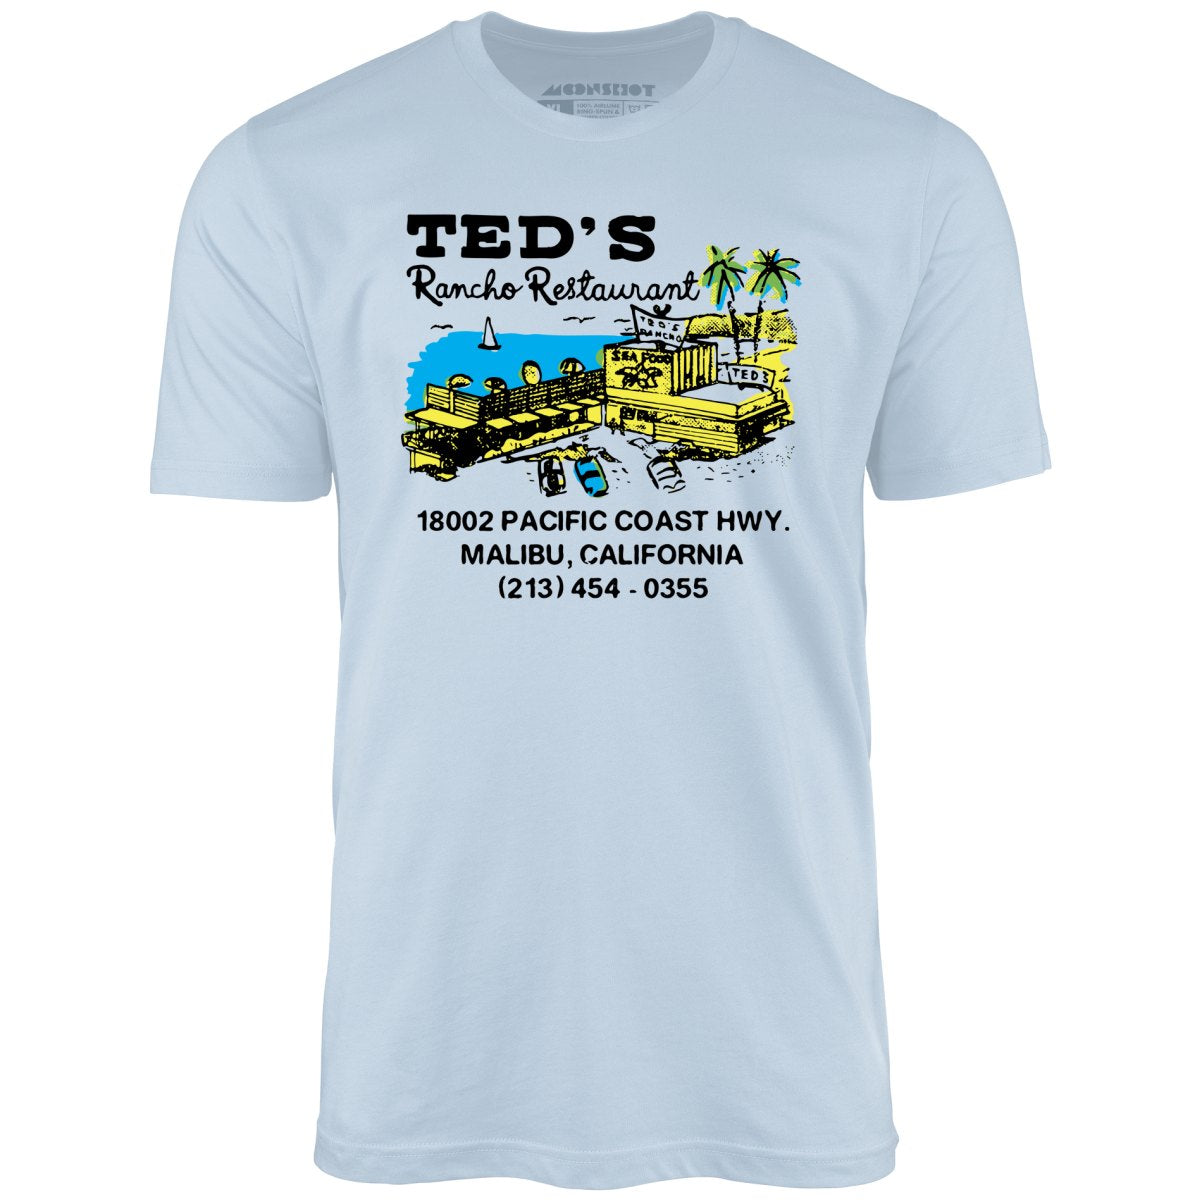 Ted's Rancho Restaurant - Malibu, CA - Vintage Restaurant - Unisex T-Shirt